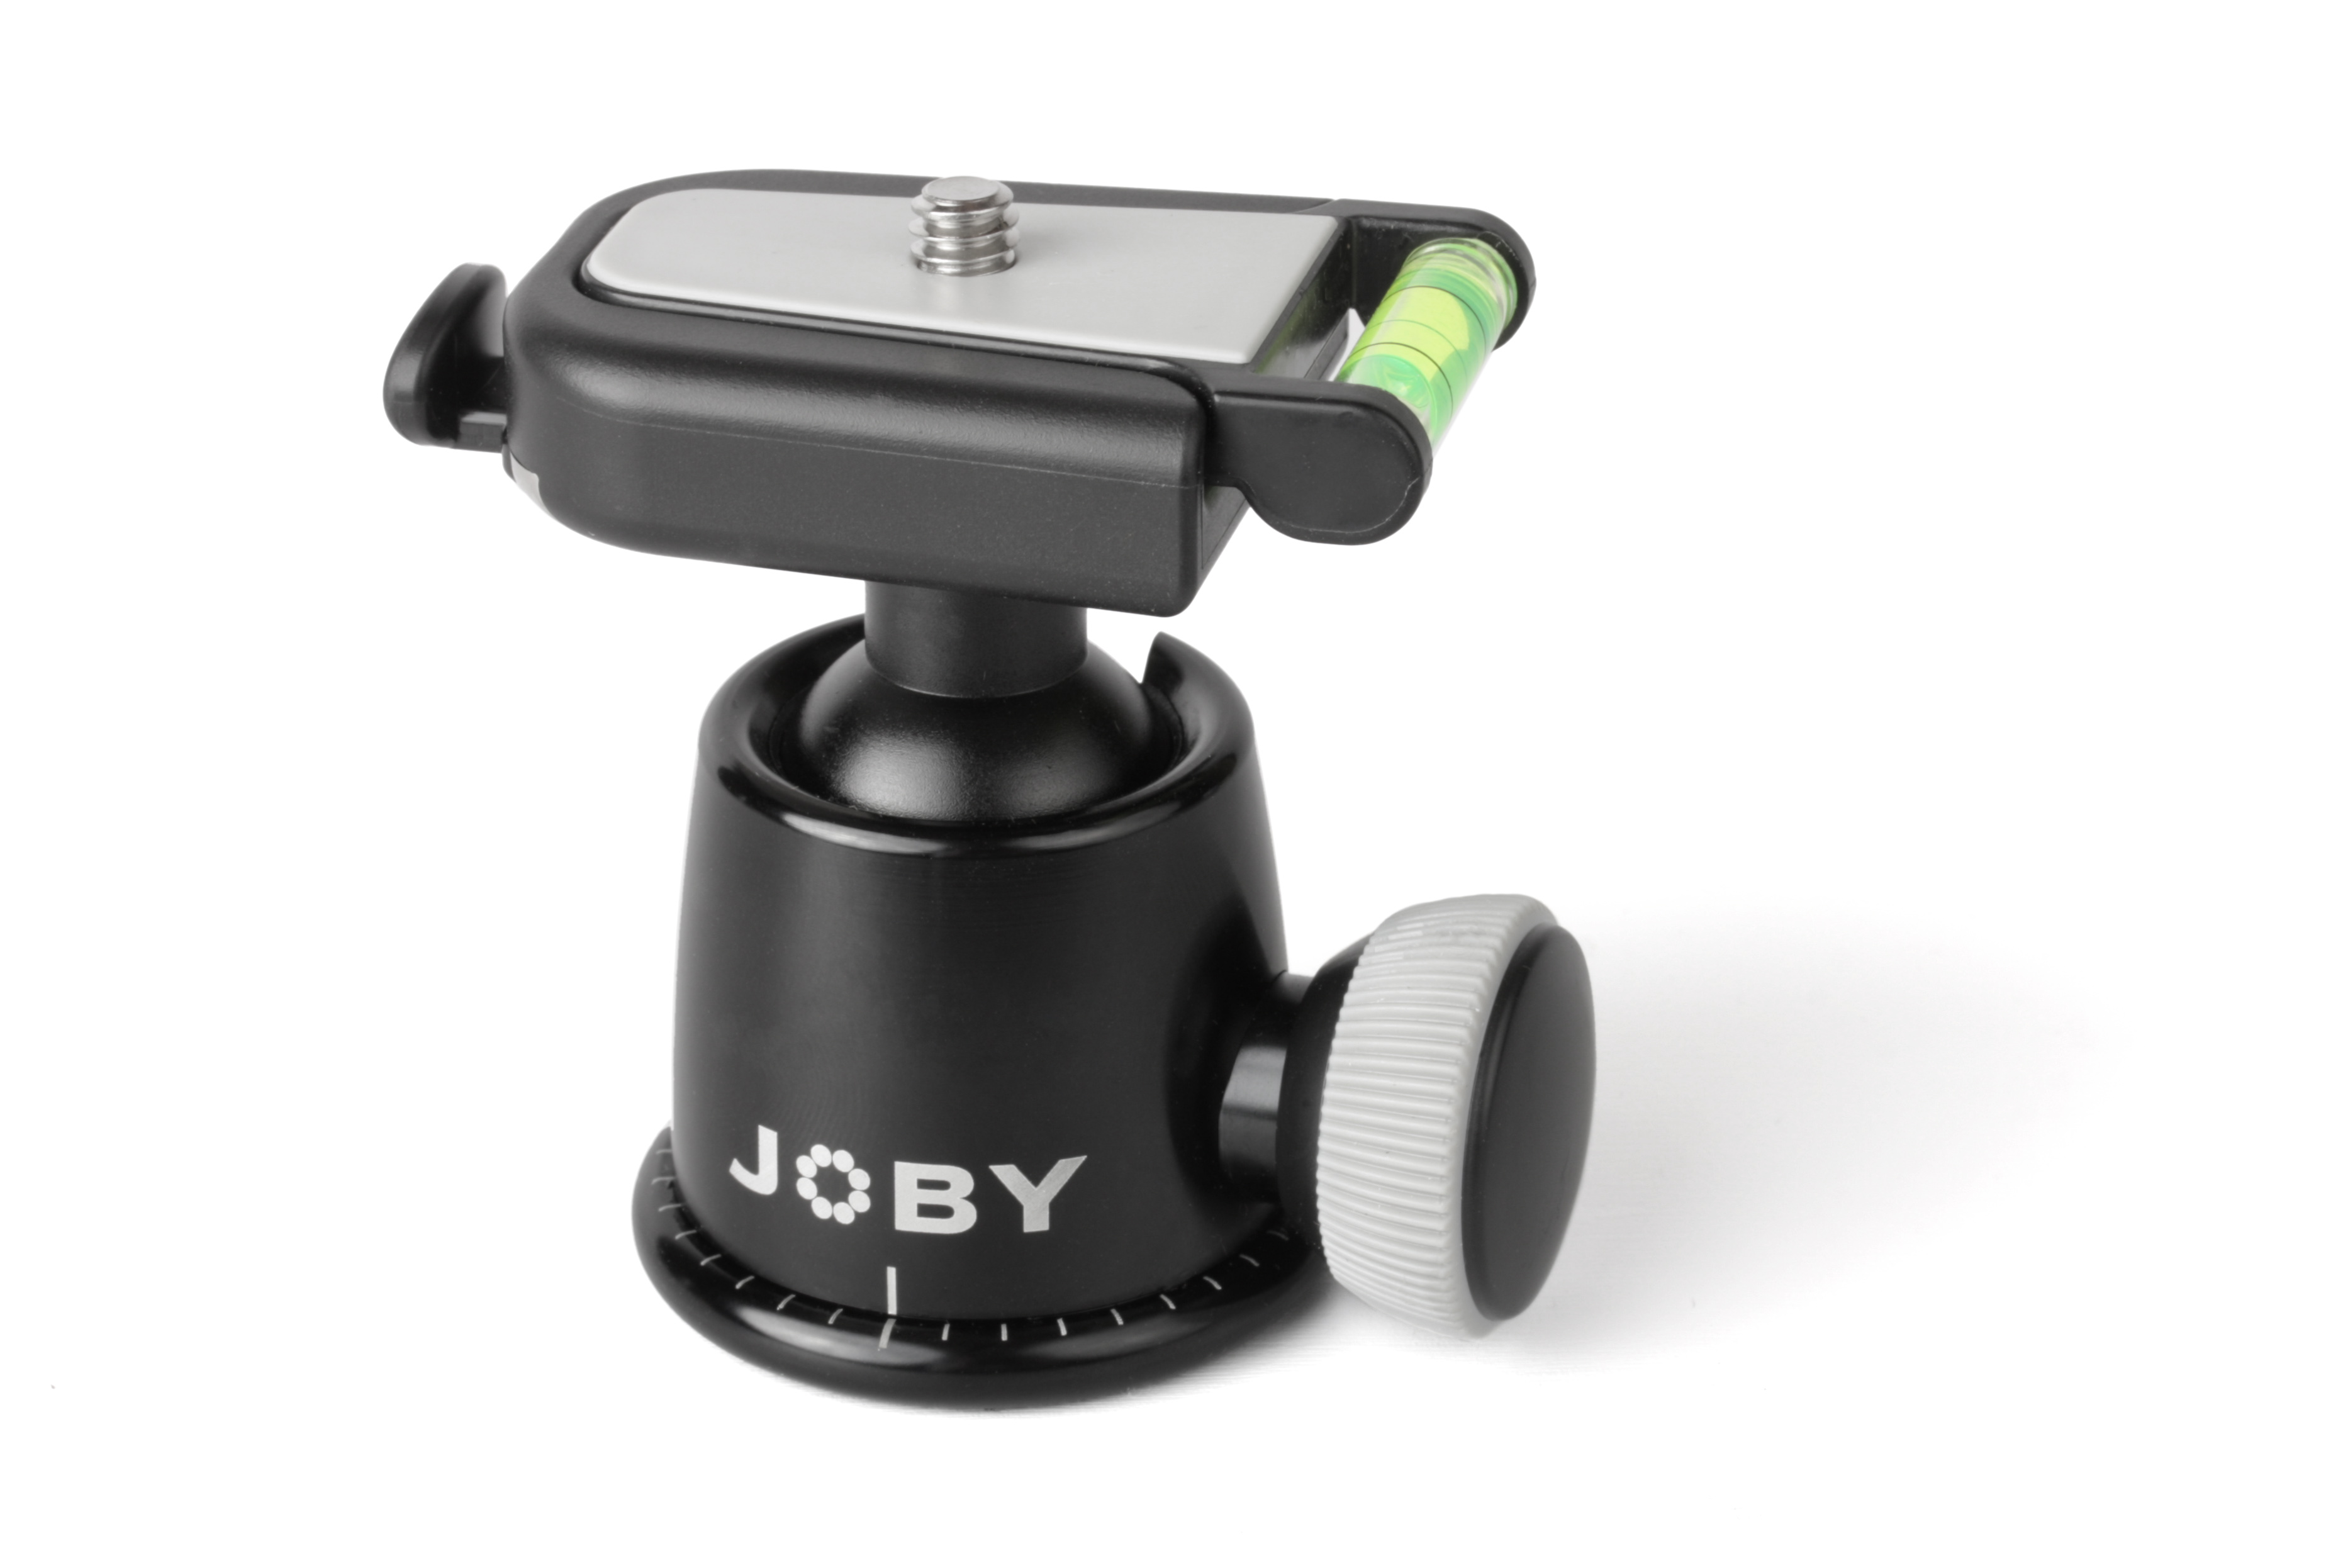 Joby Gorillapod SLR-Zoom gömbfej